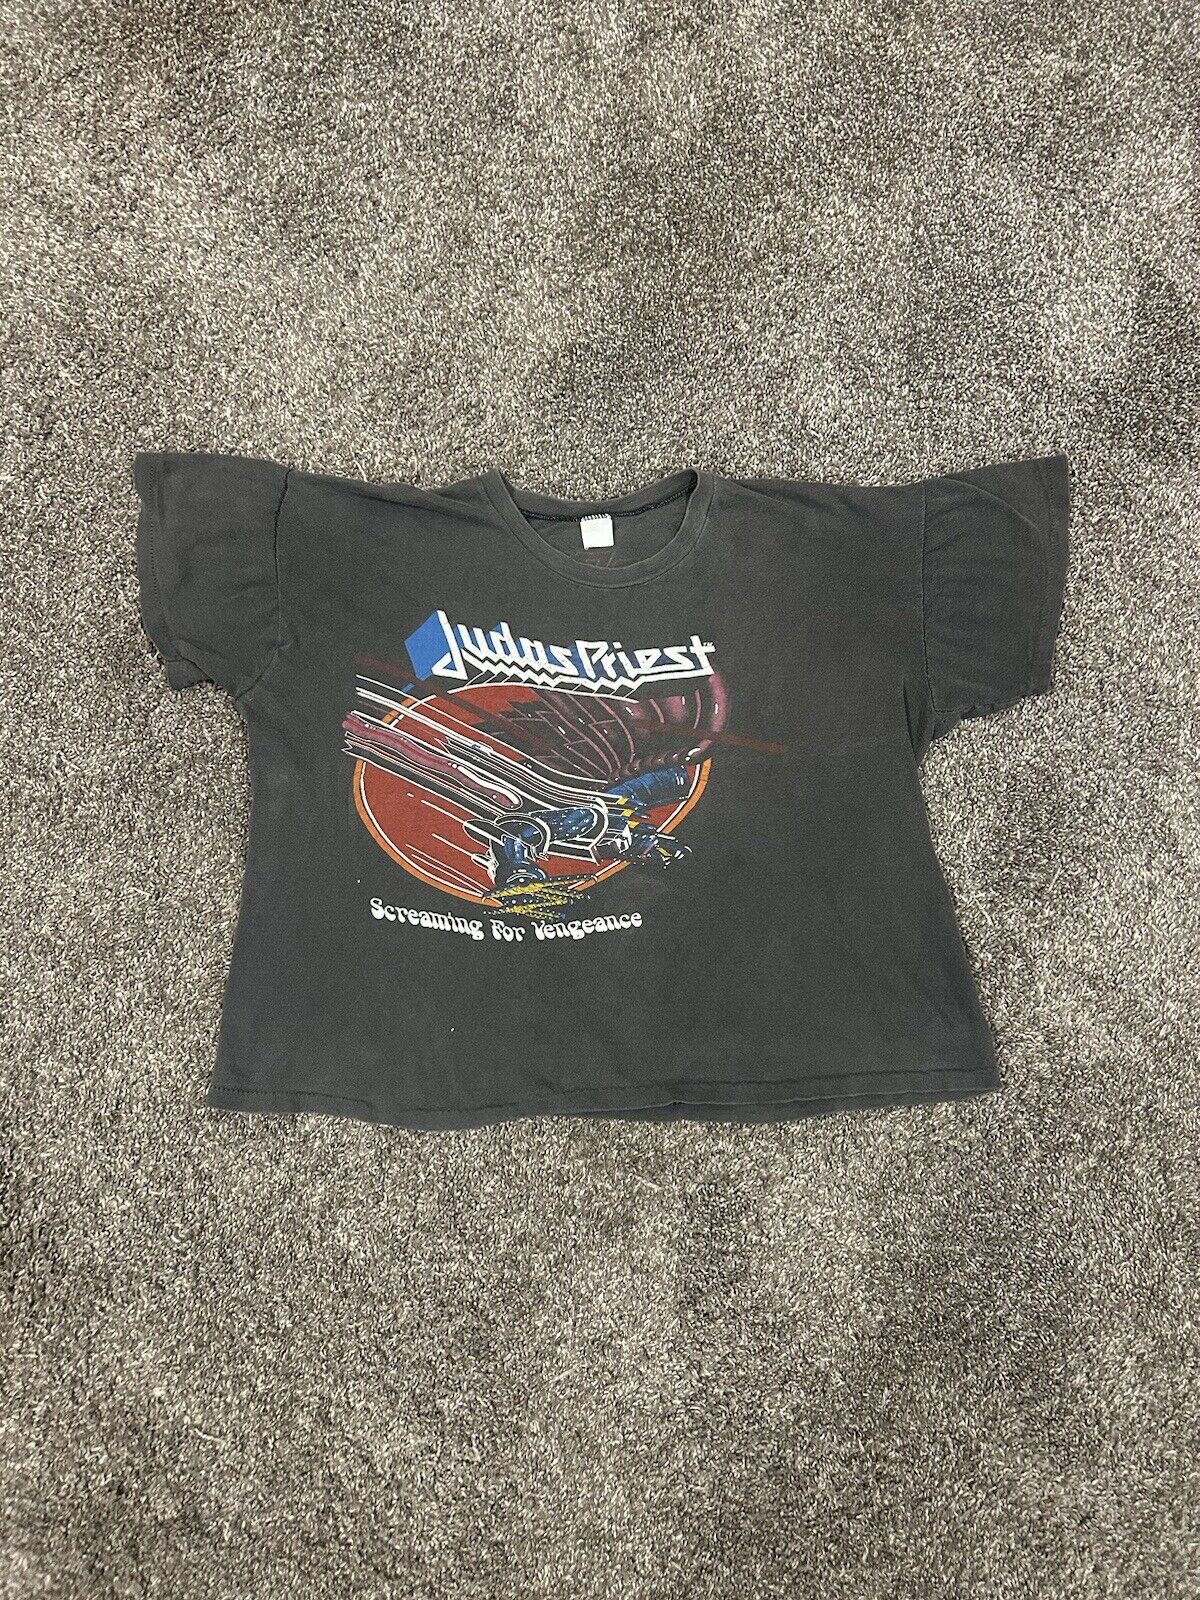 Vintage Judas Priest Screaming For Vengeance 1982-83 World Tour T Shirt Sz Small